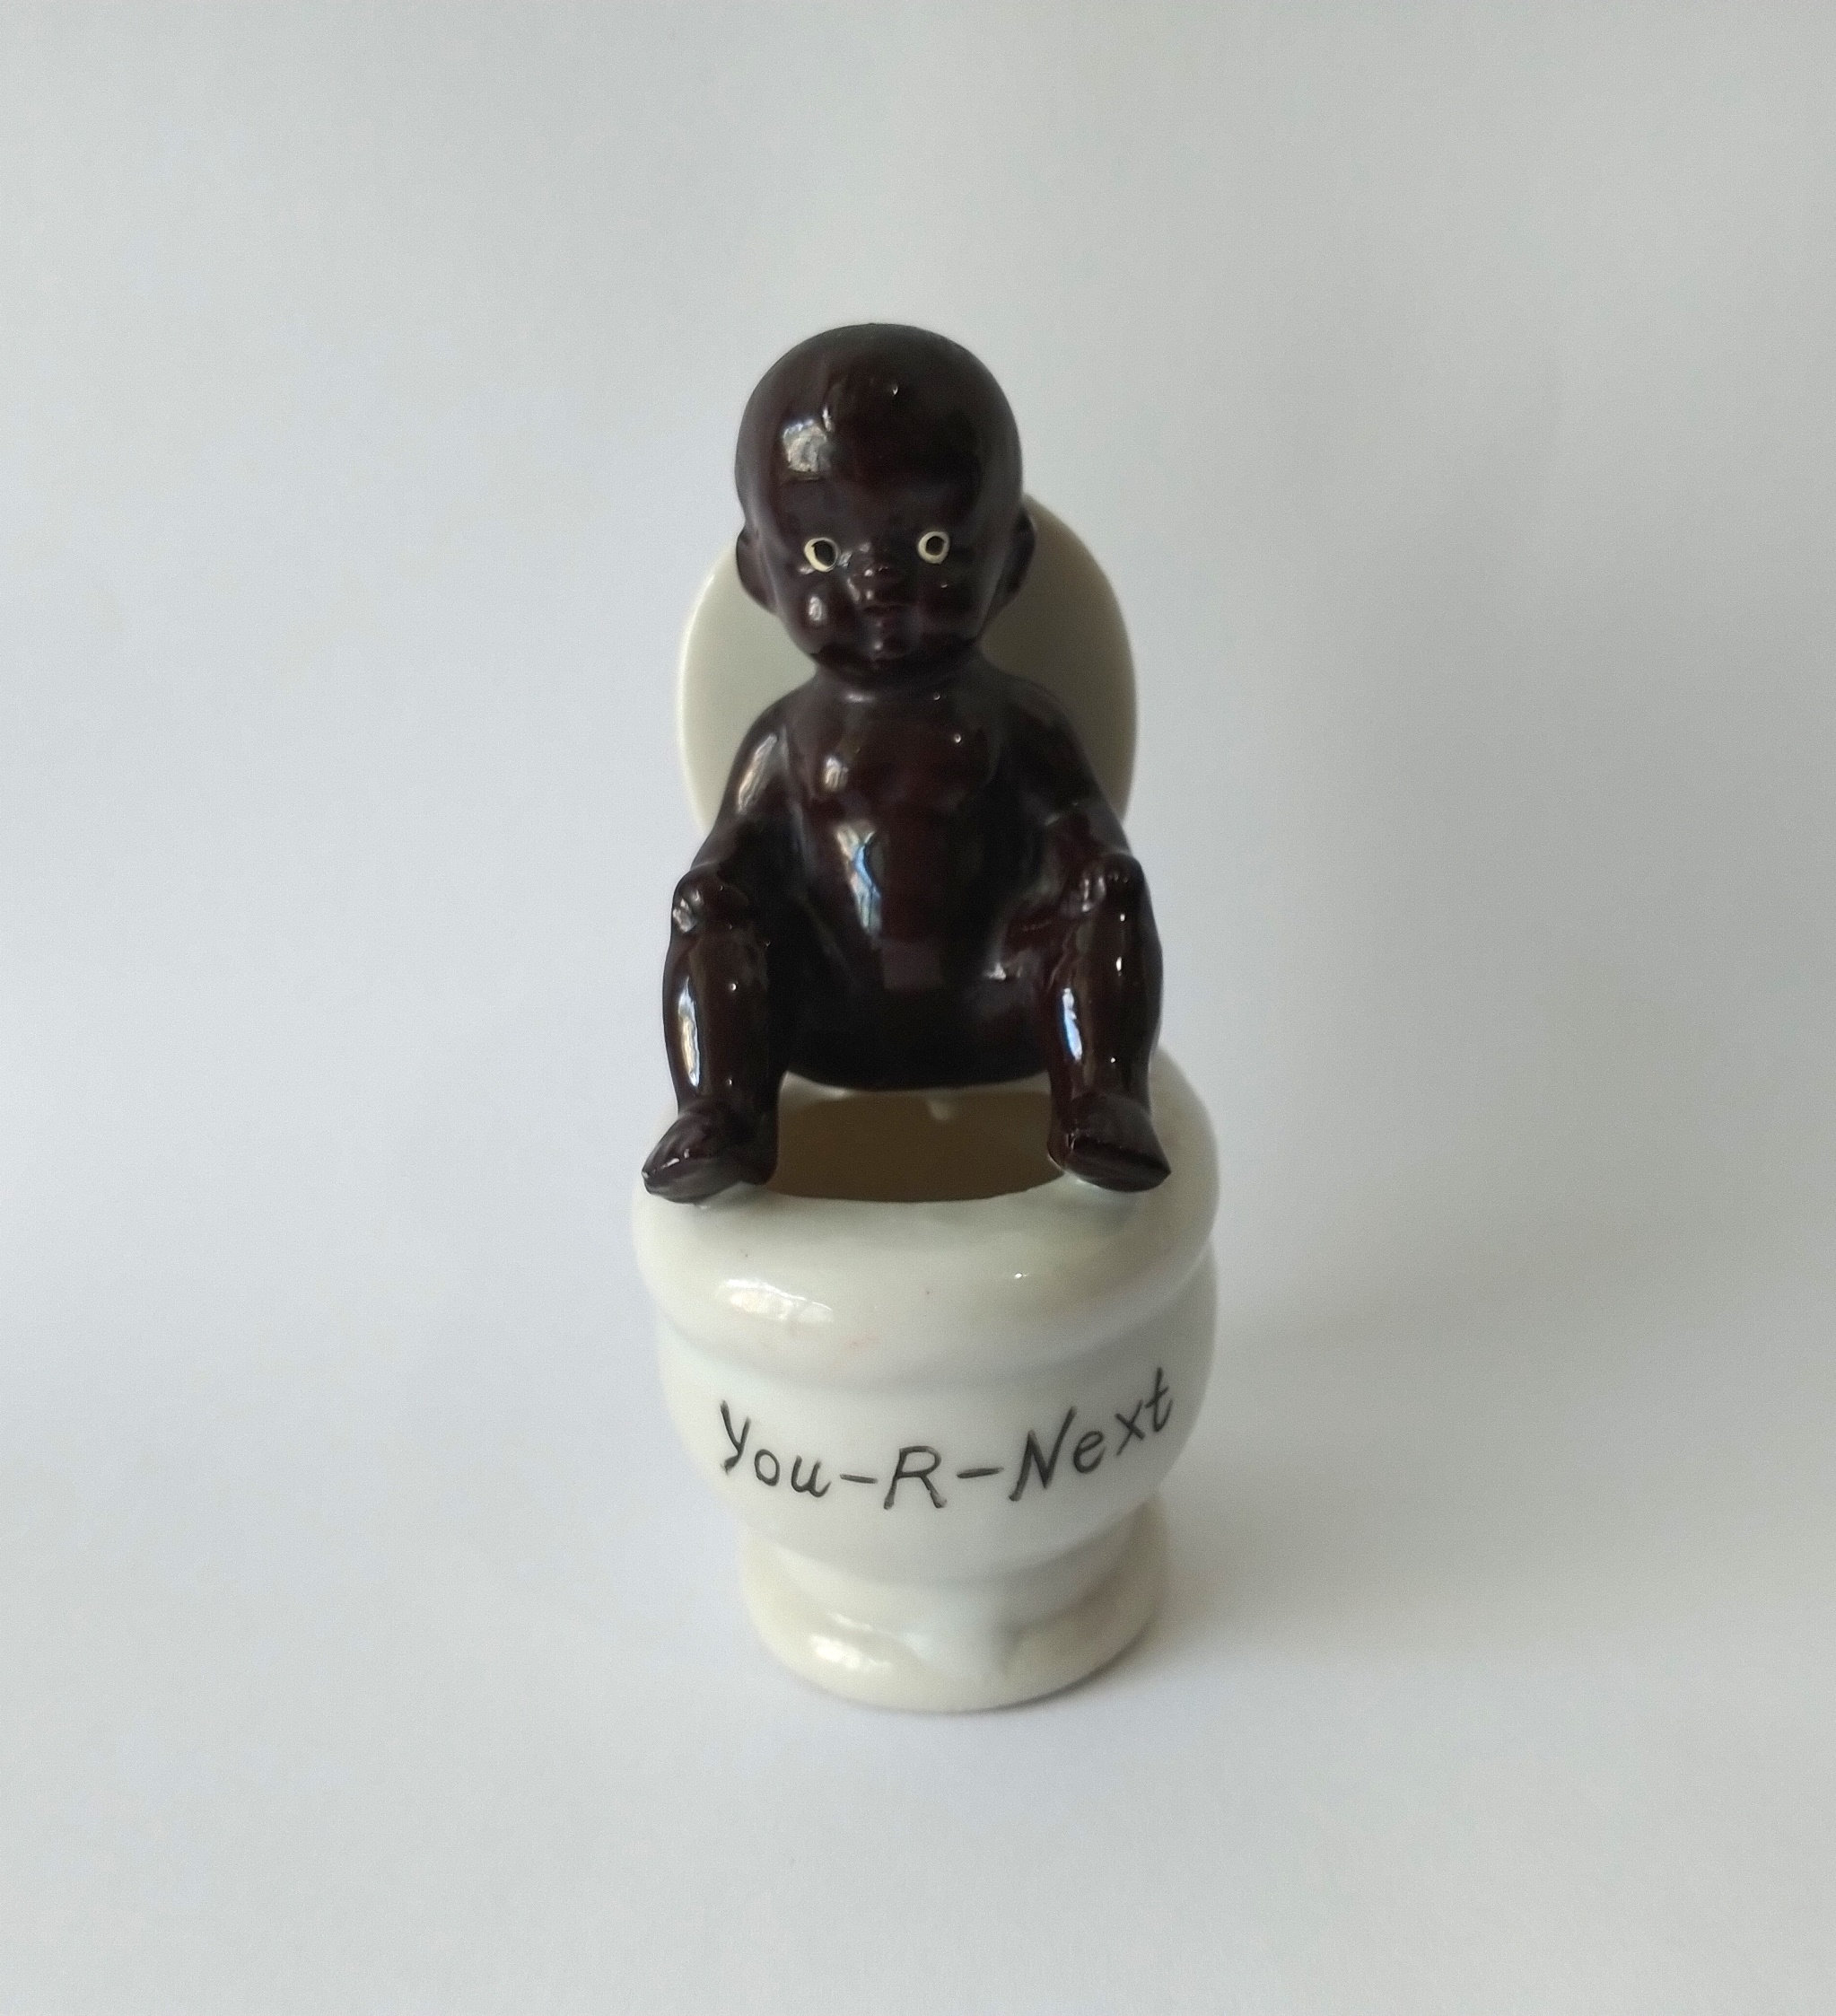 Vintage Japan Black African Baby on Toilet Porcelain Figurine You-R-Next